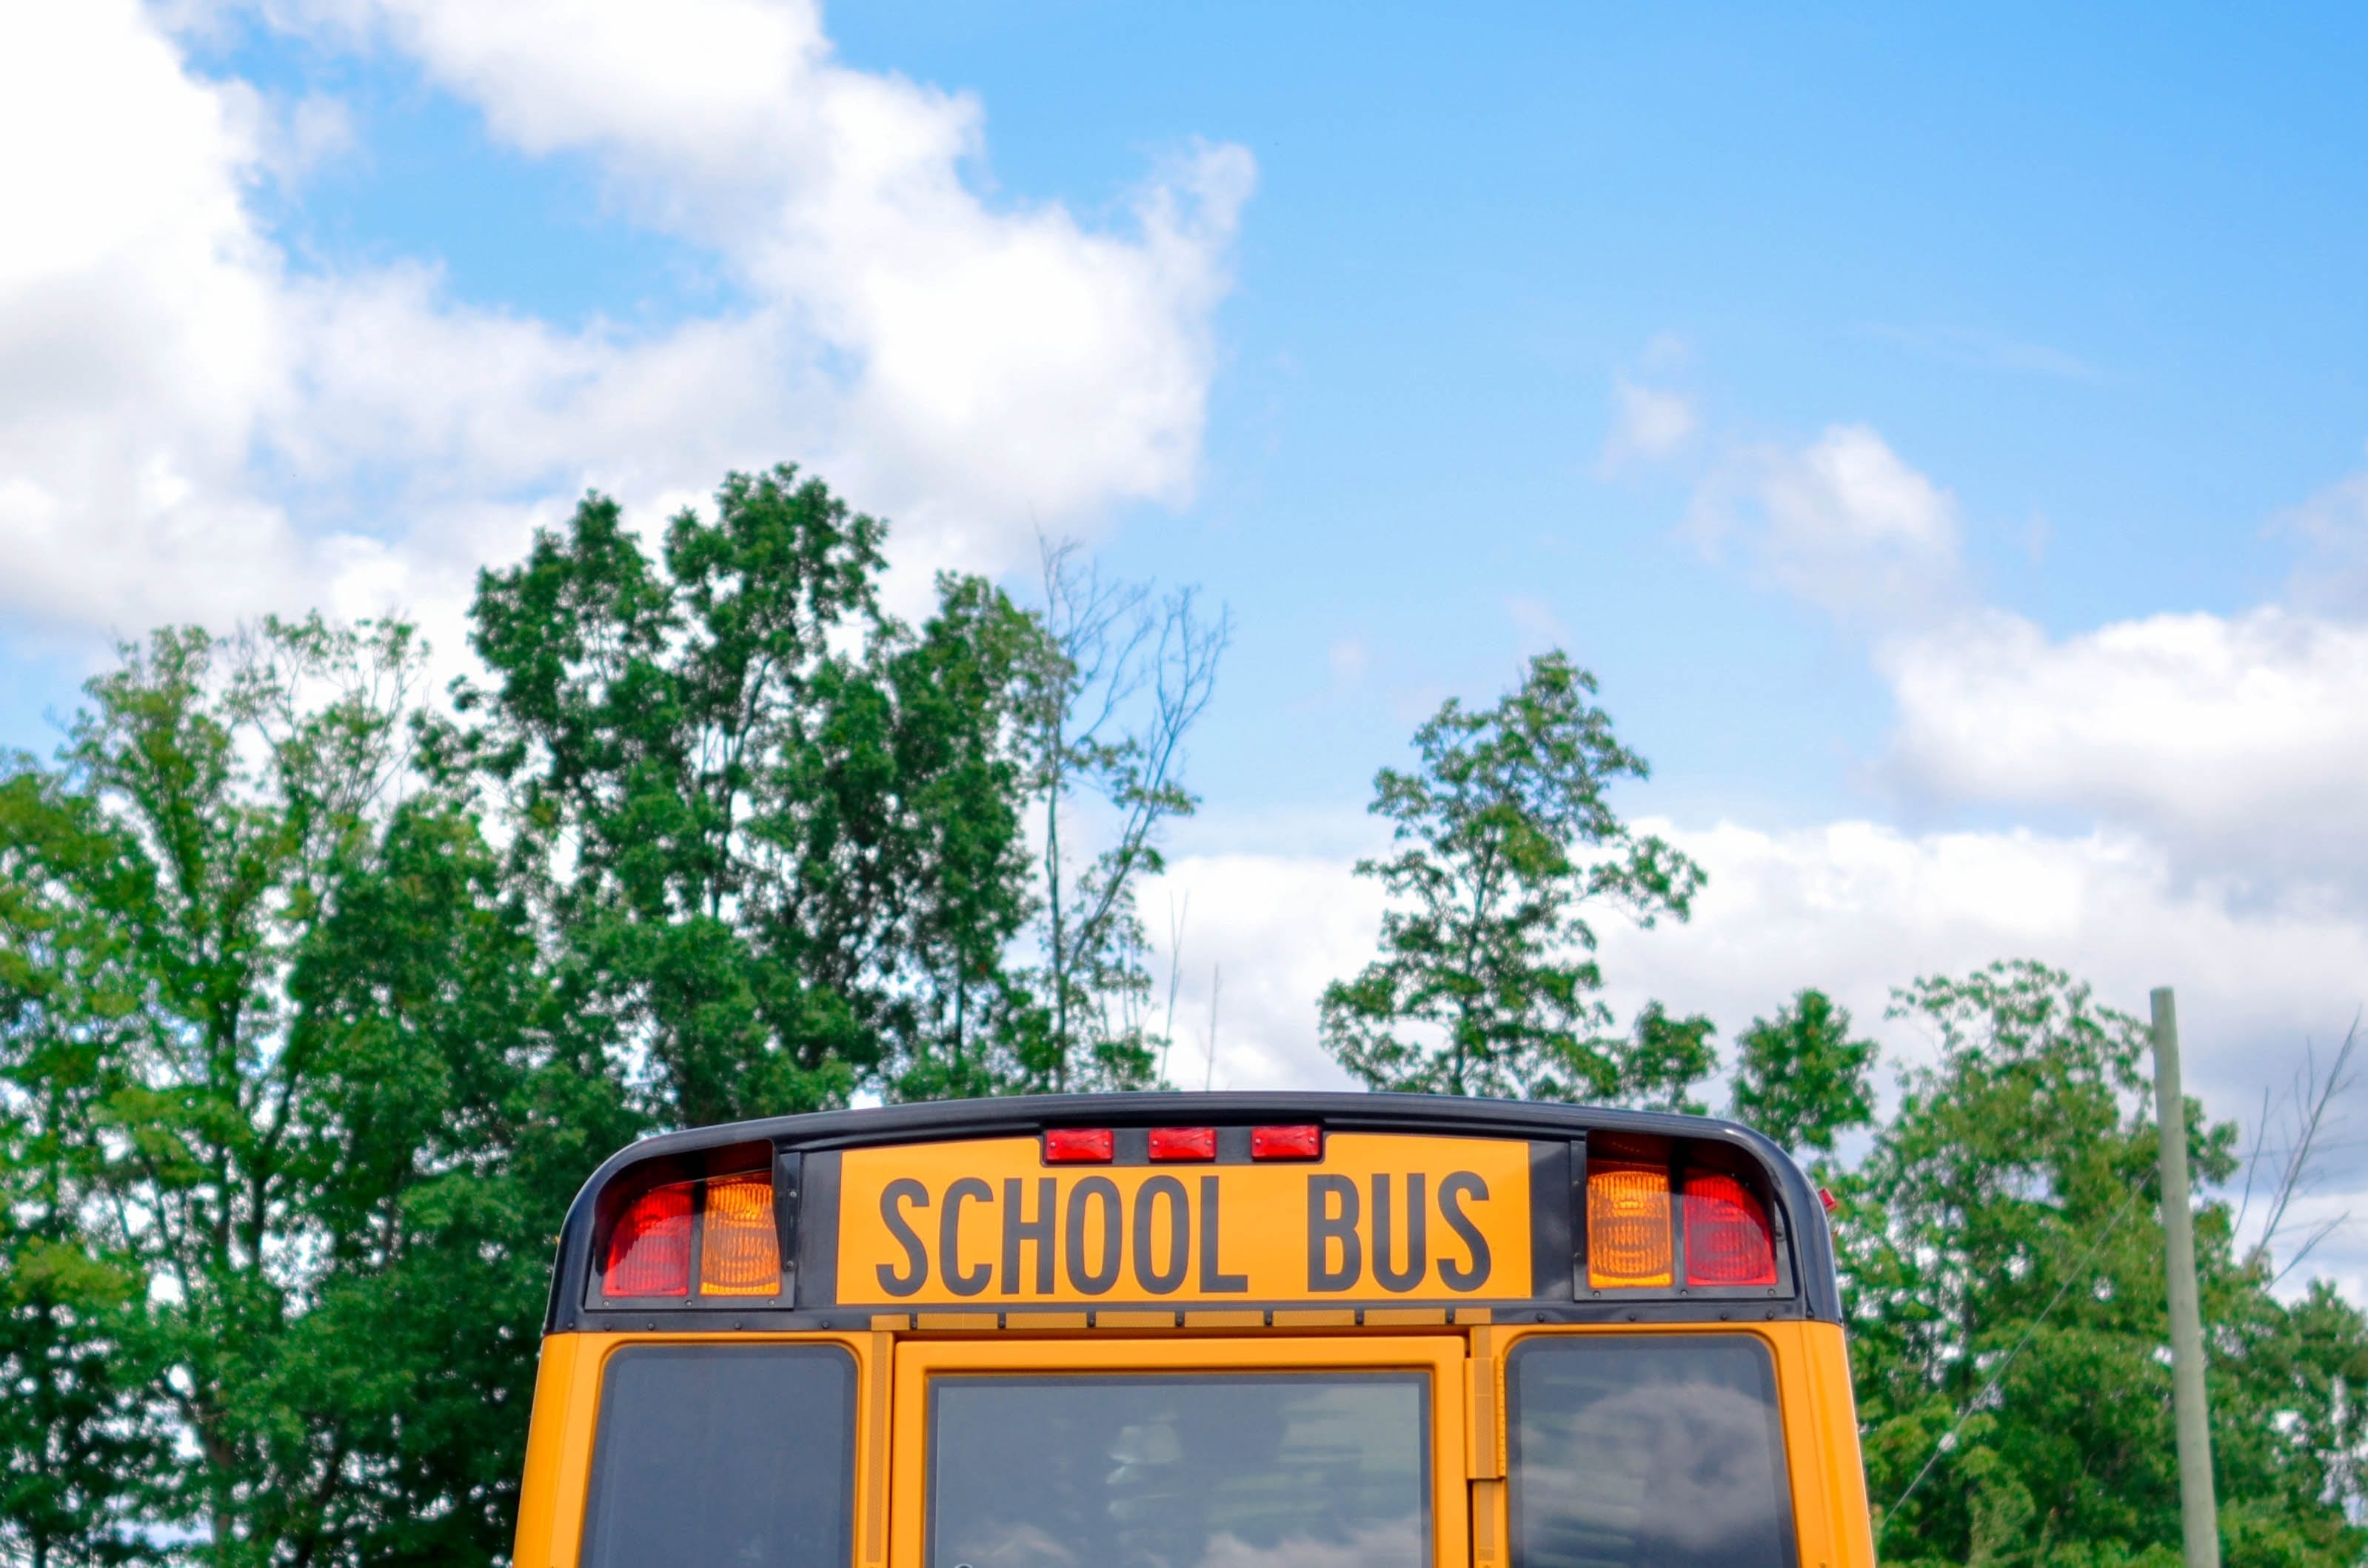 Man Tries to Get Home in a Stolen School Bus